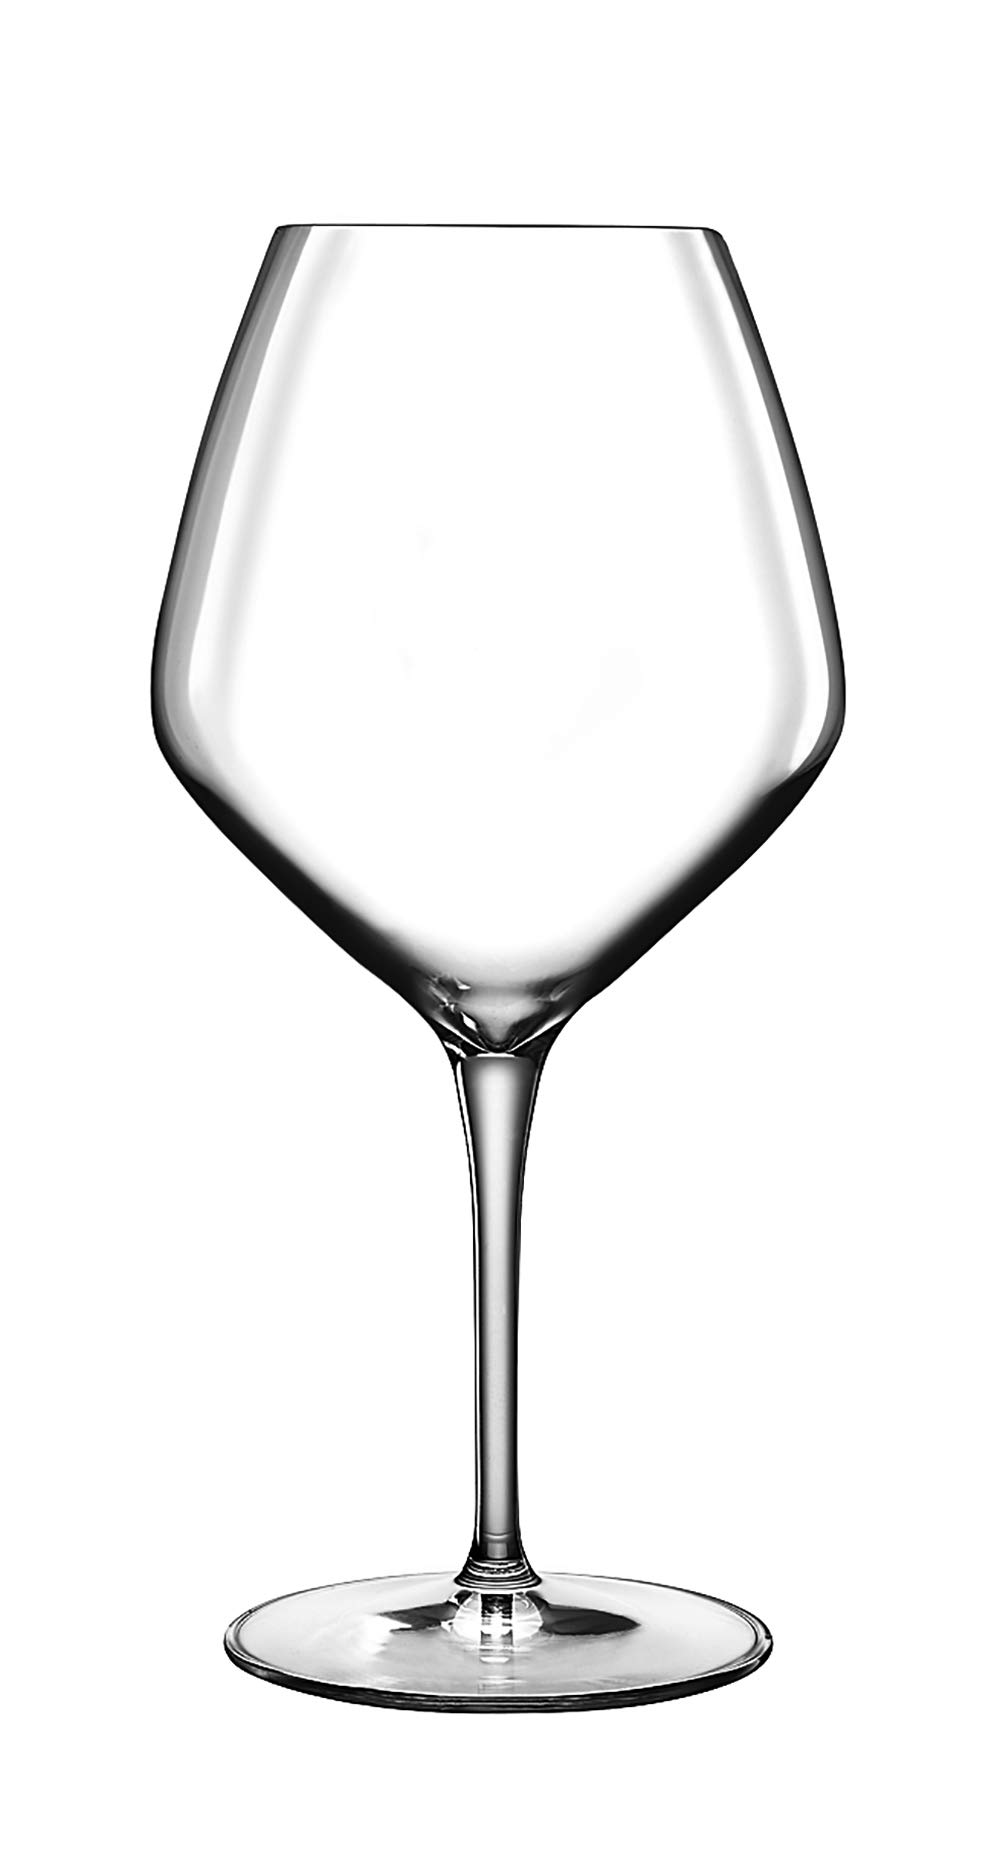 Luigi Bormioli's Atelier Pinot Noir wine glasses